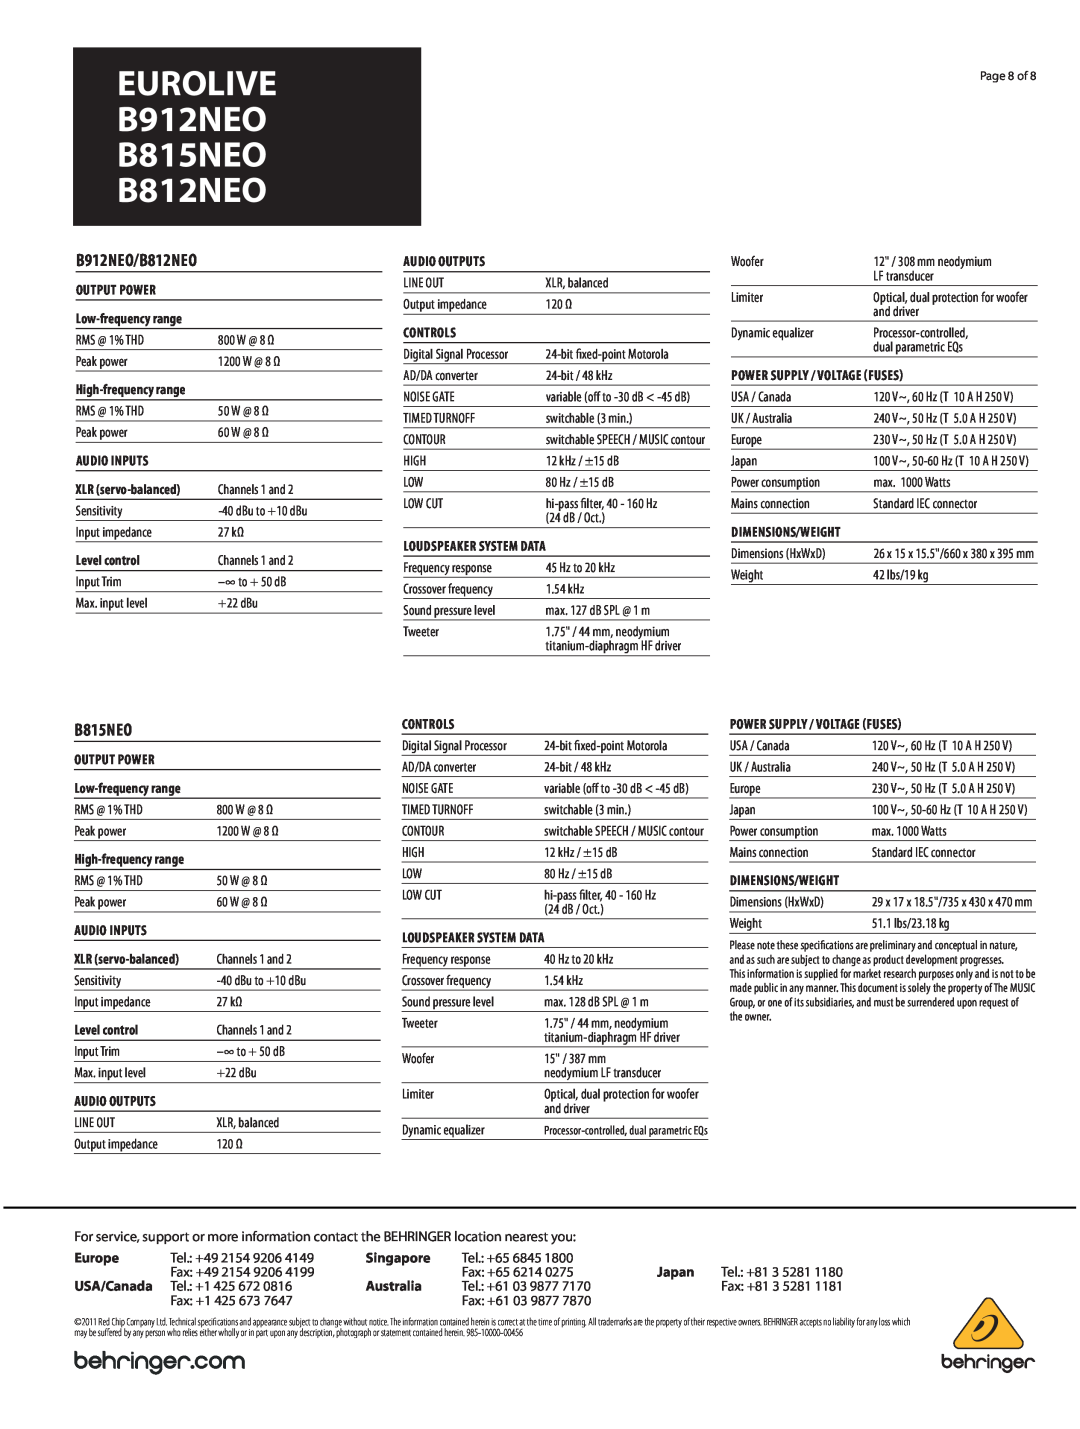 Behringer manual EUROLIVE B912NEO B815NEO B812NEO, B912NEO/B812NEO 